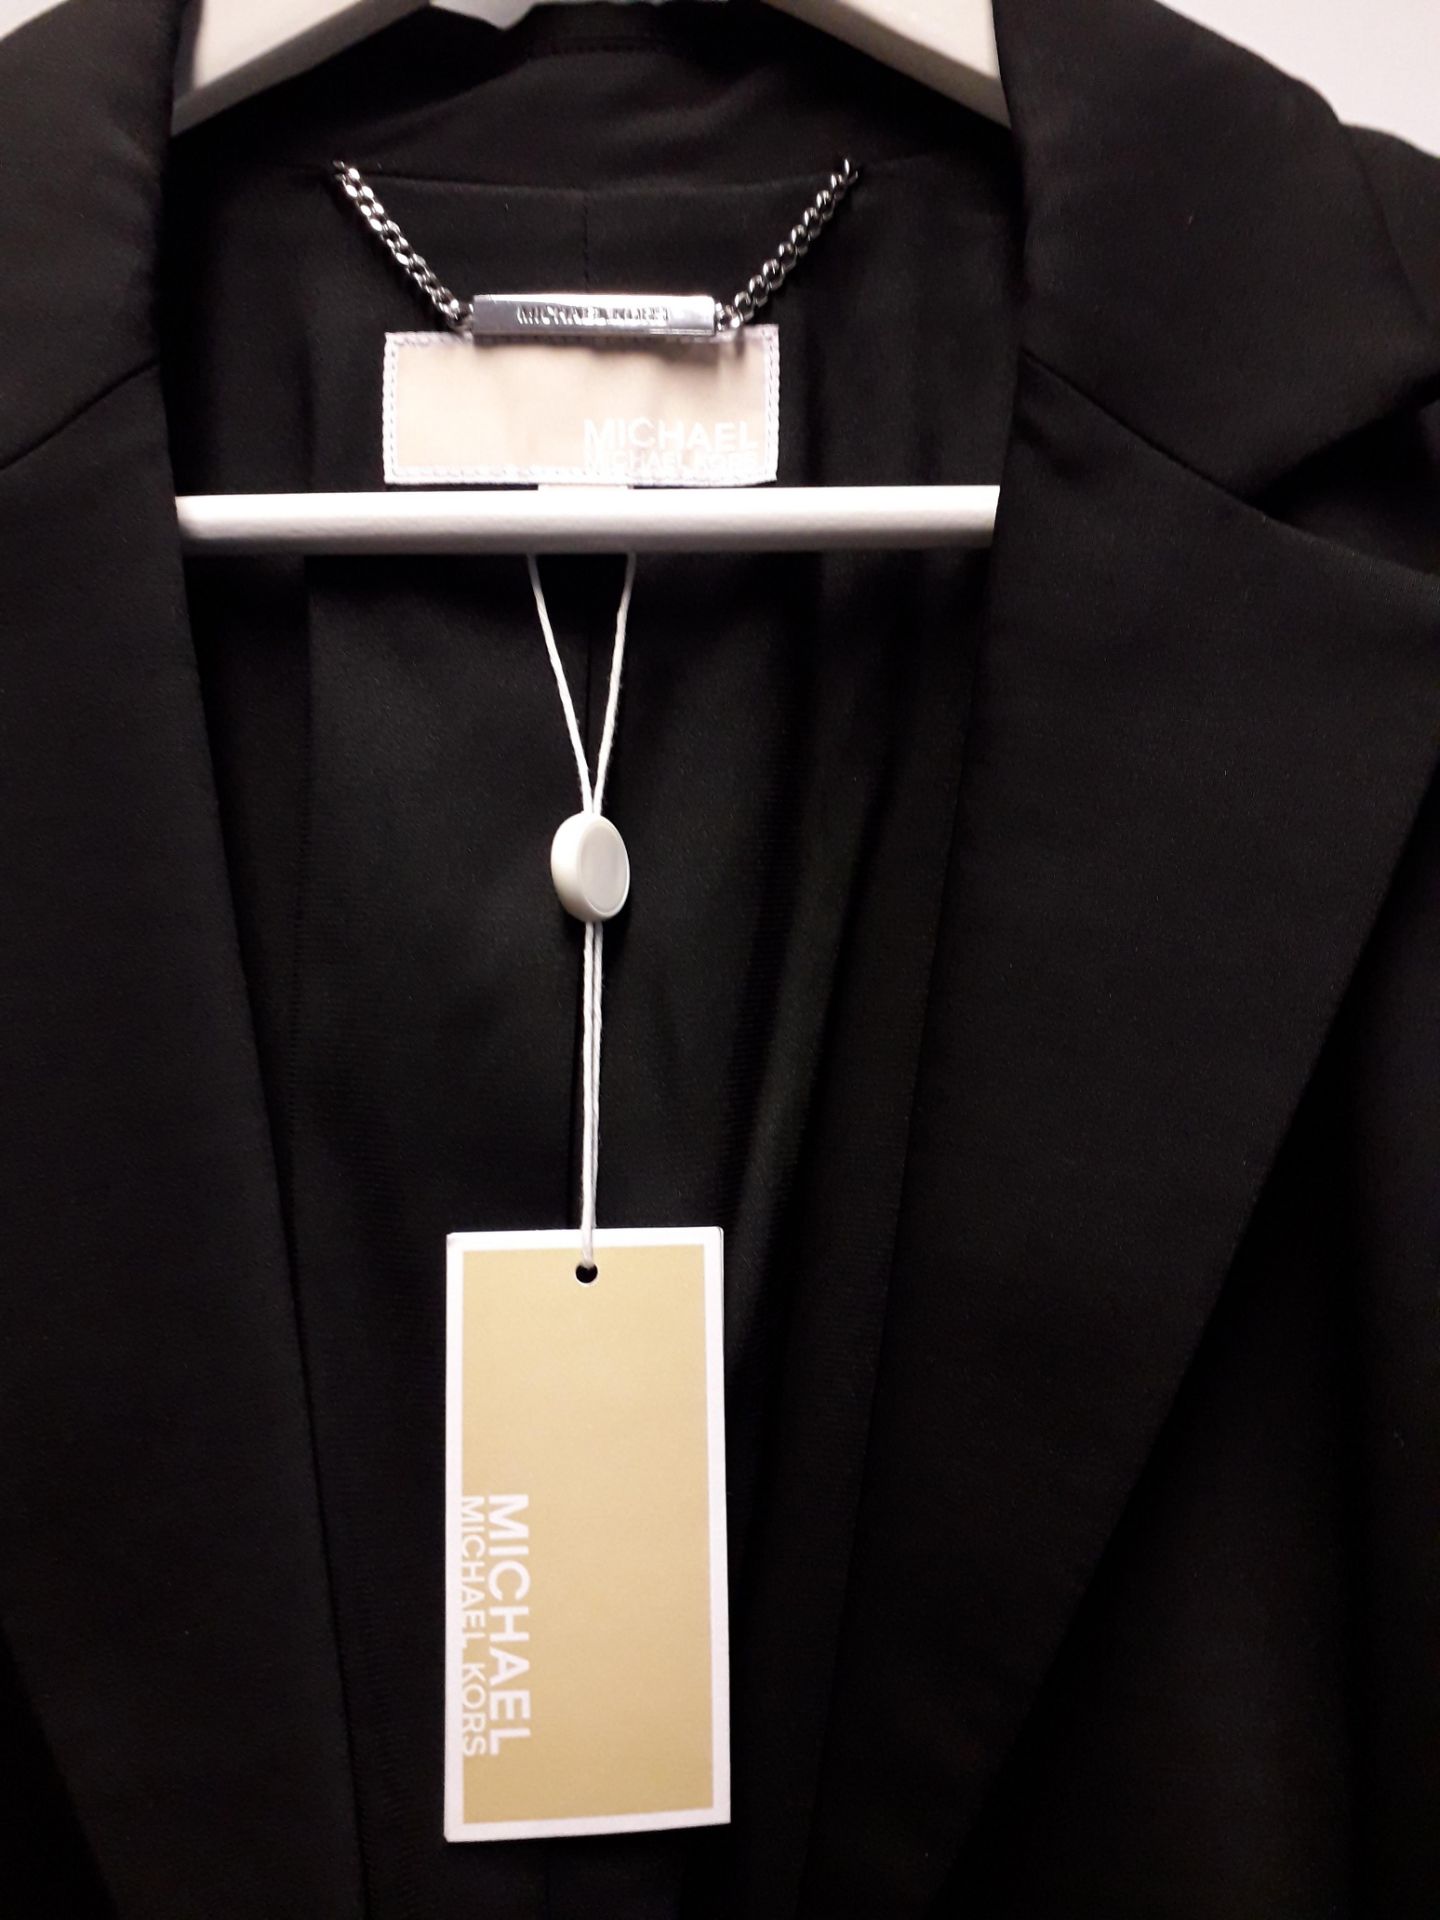 1 x Michael Kors Black Longline Sleeveless Jacket - Size: 10 - Material: 96% Wool, 4% Elastane. - Image 6 of 6